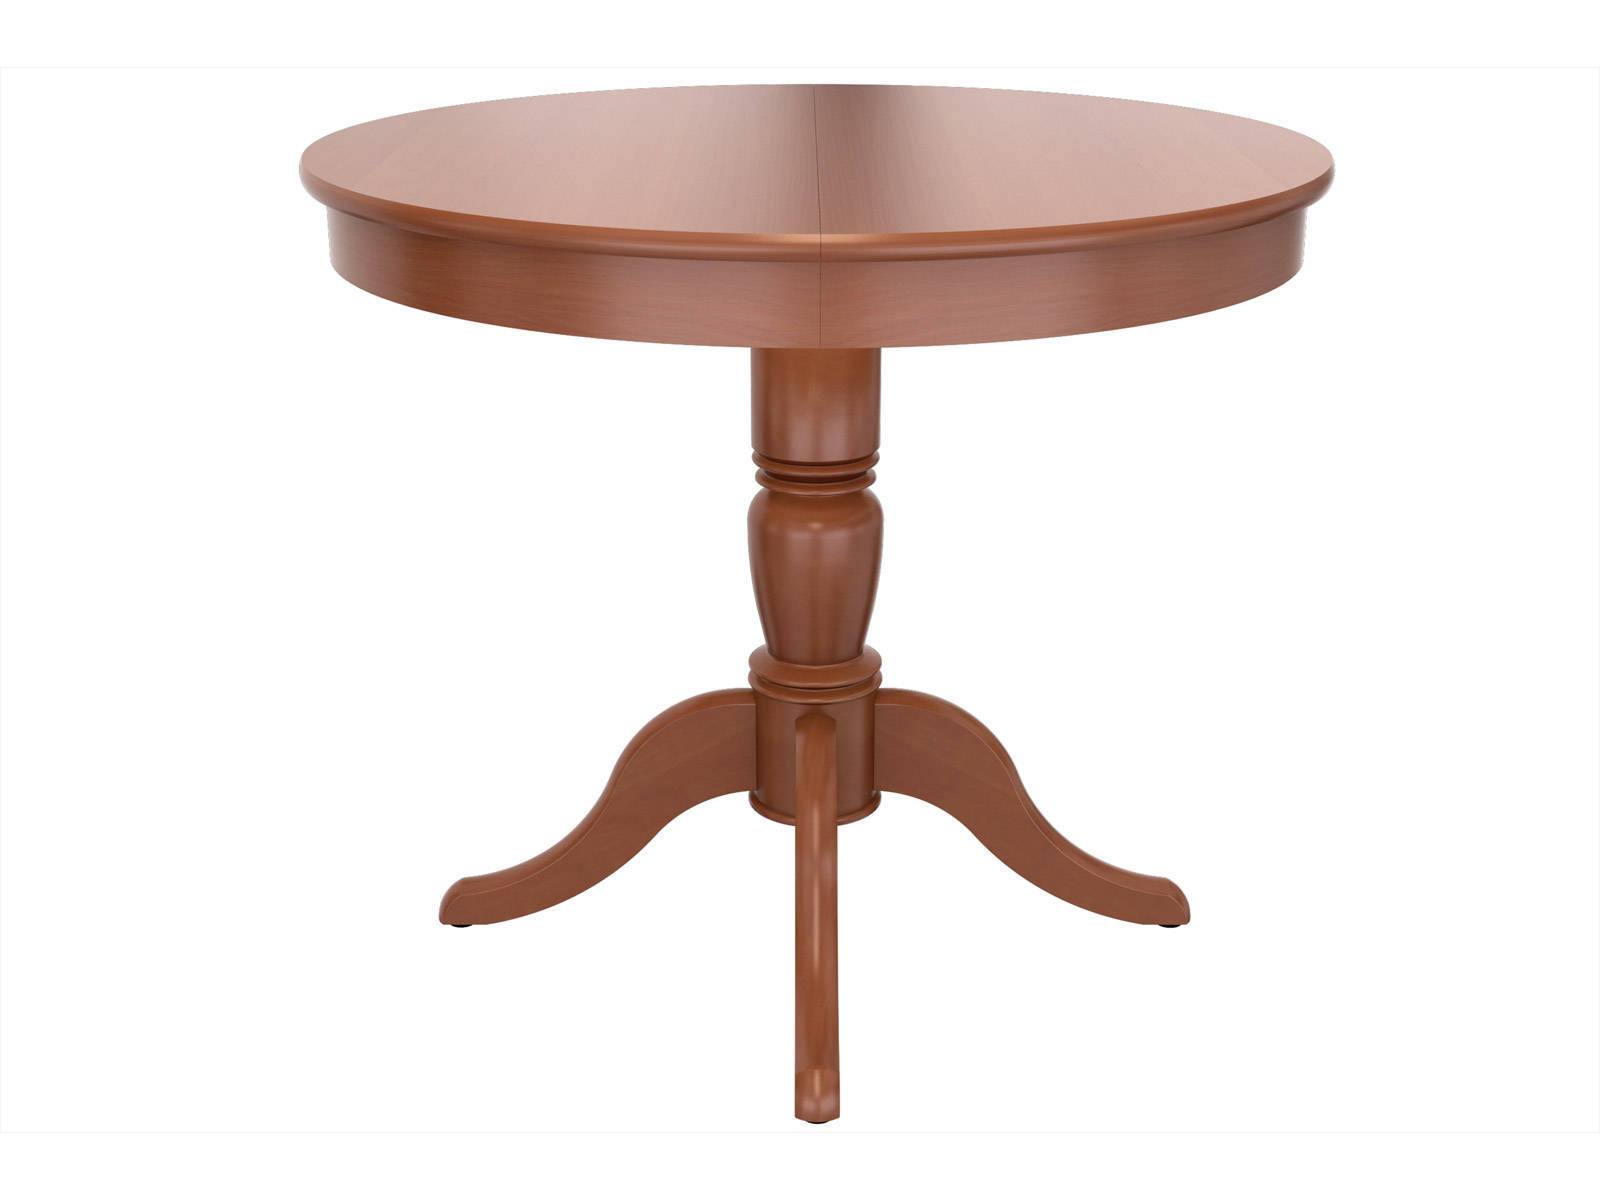 стол фламинго птица красивая 65x65 см кухонный квадратный с принтом Кухонный стол Фламинго 1 Коричневый, Красный, Массив